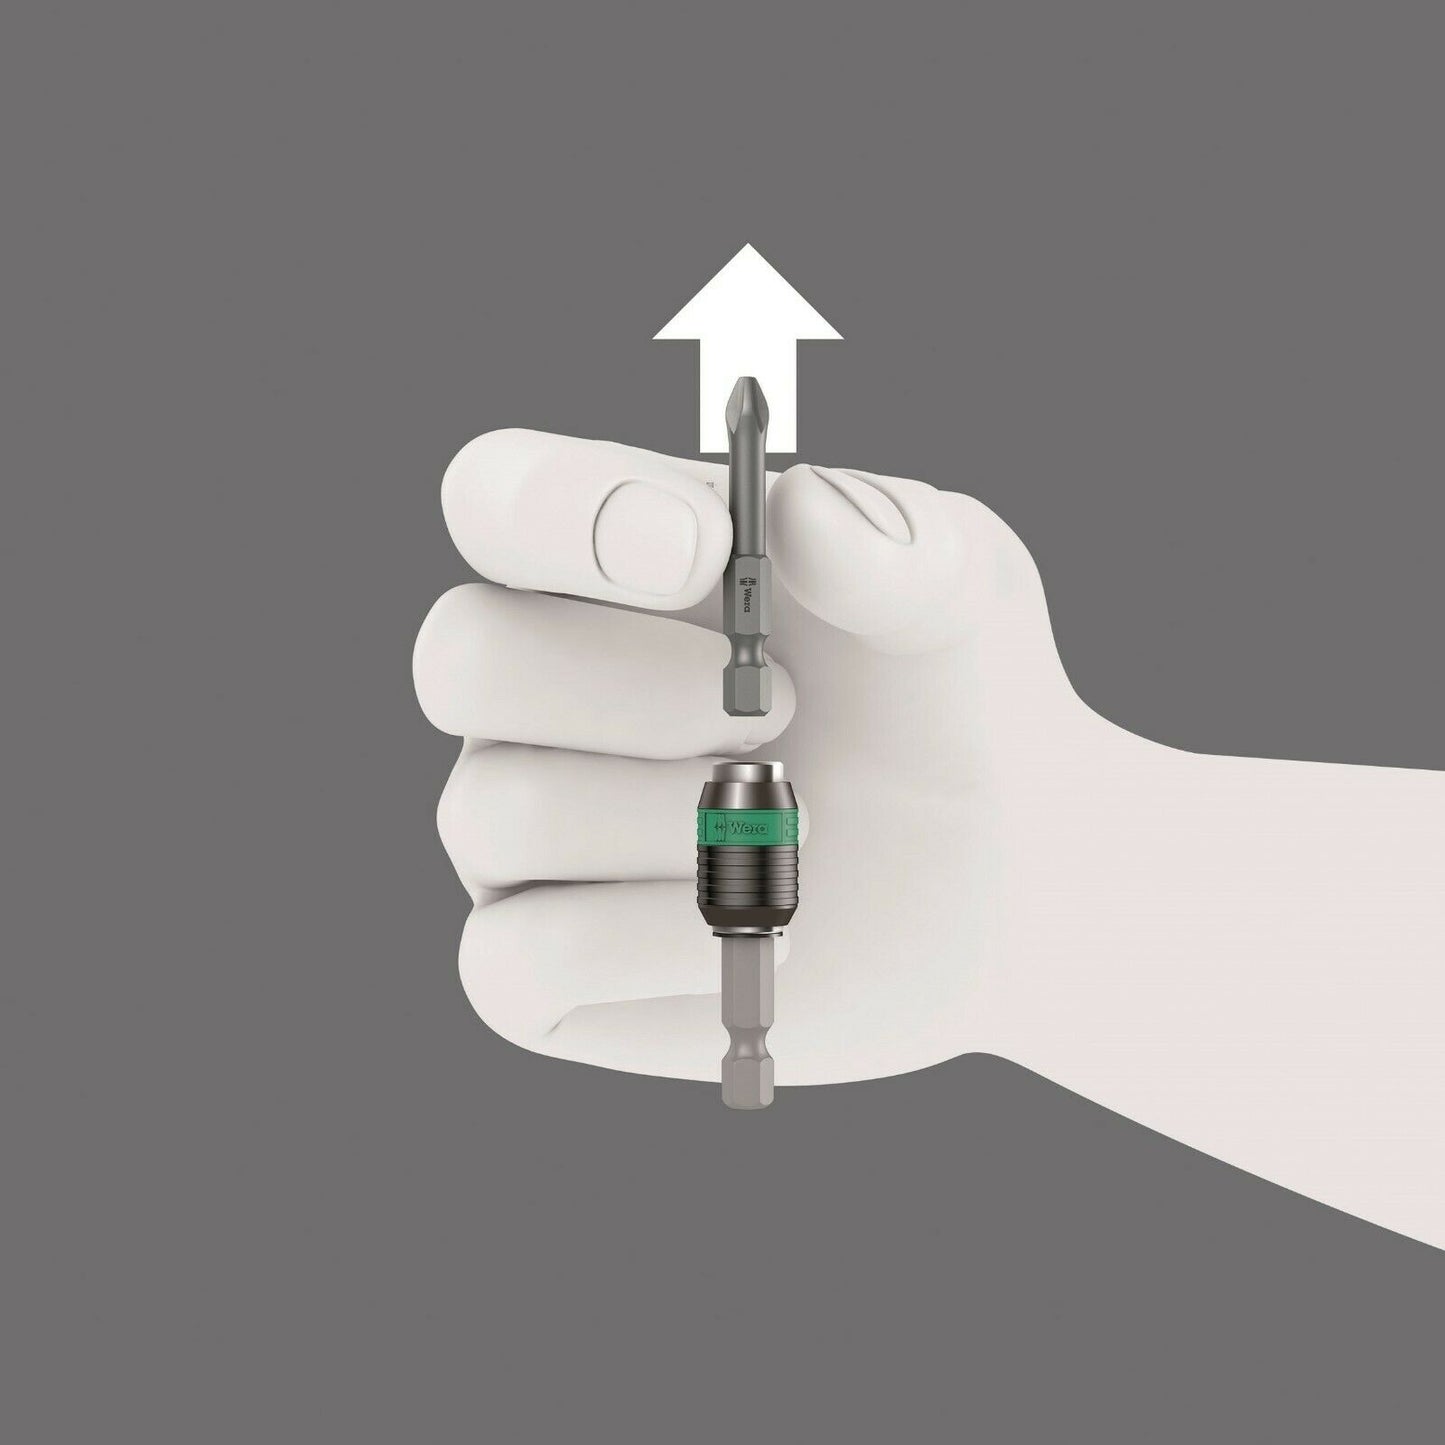 wera 813 r kraftform kompakt screwdriver with rapidaptor chuck 05051272001